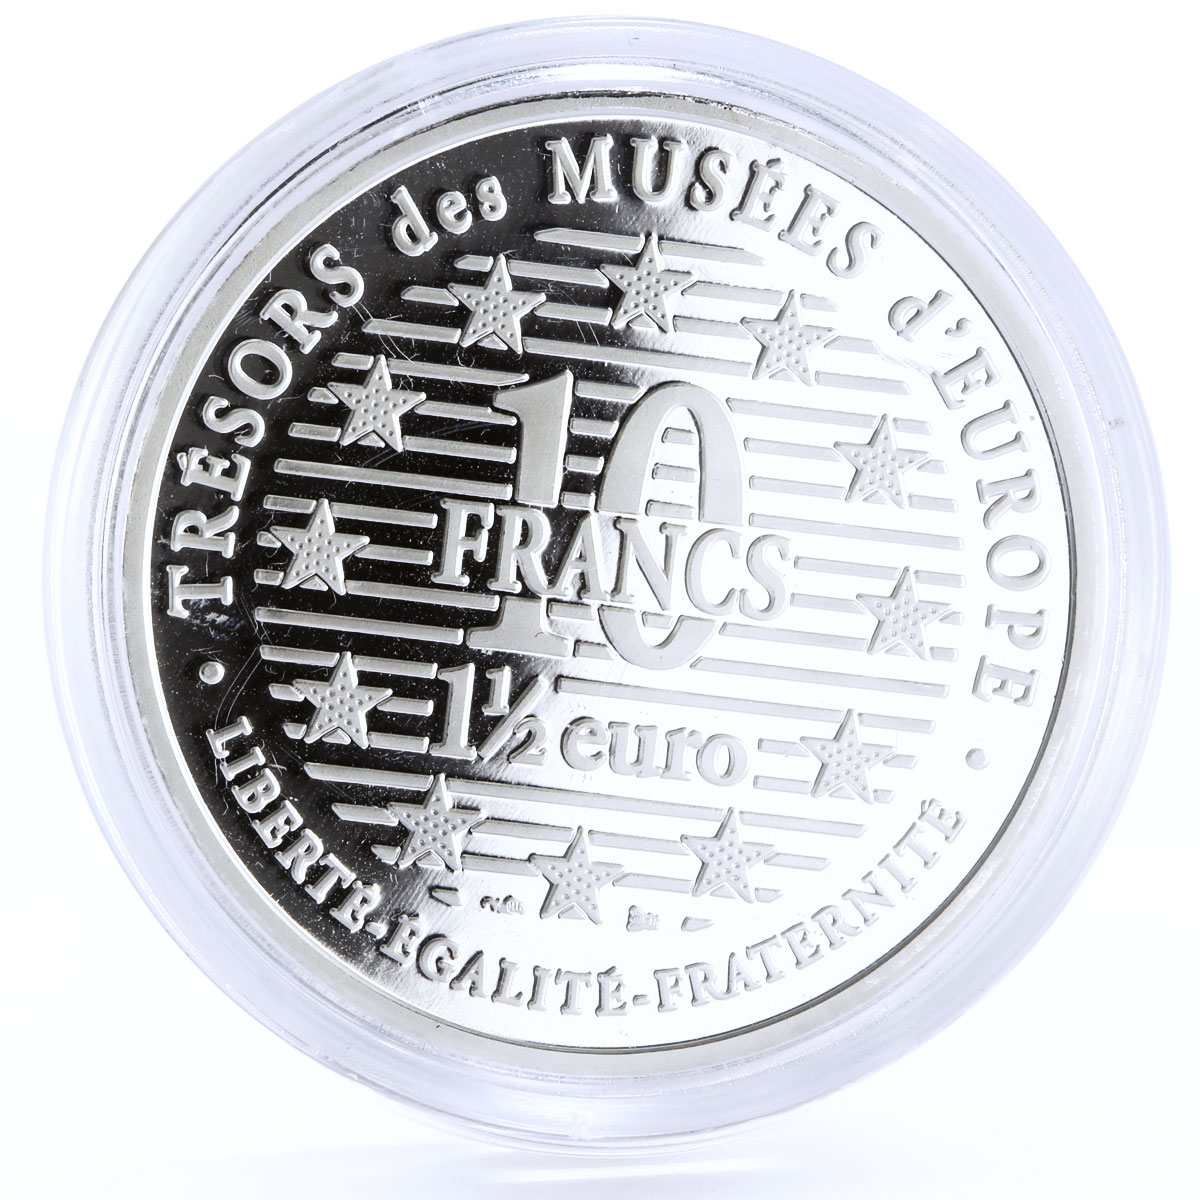 France 10 francs European Museums Treasures Japanese Geisha Art silver coin 1997